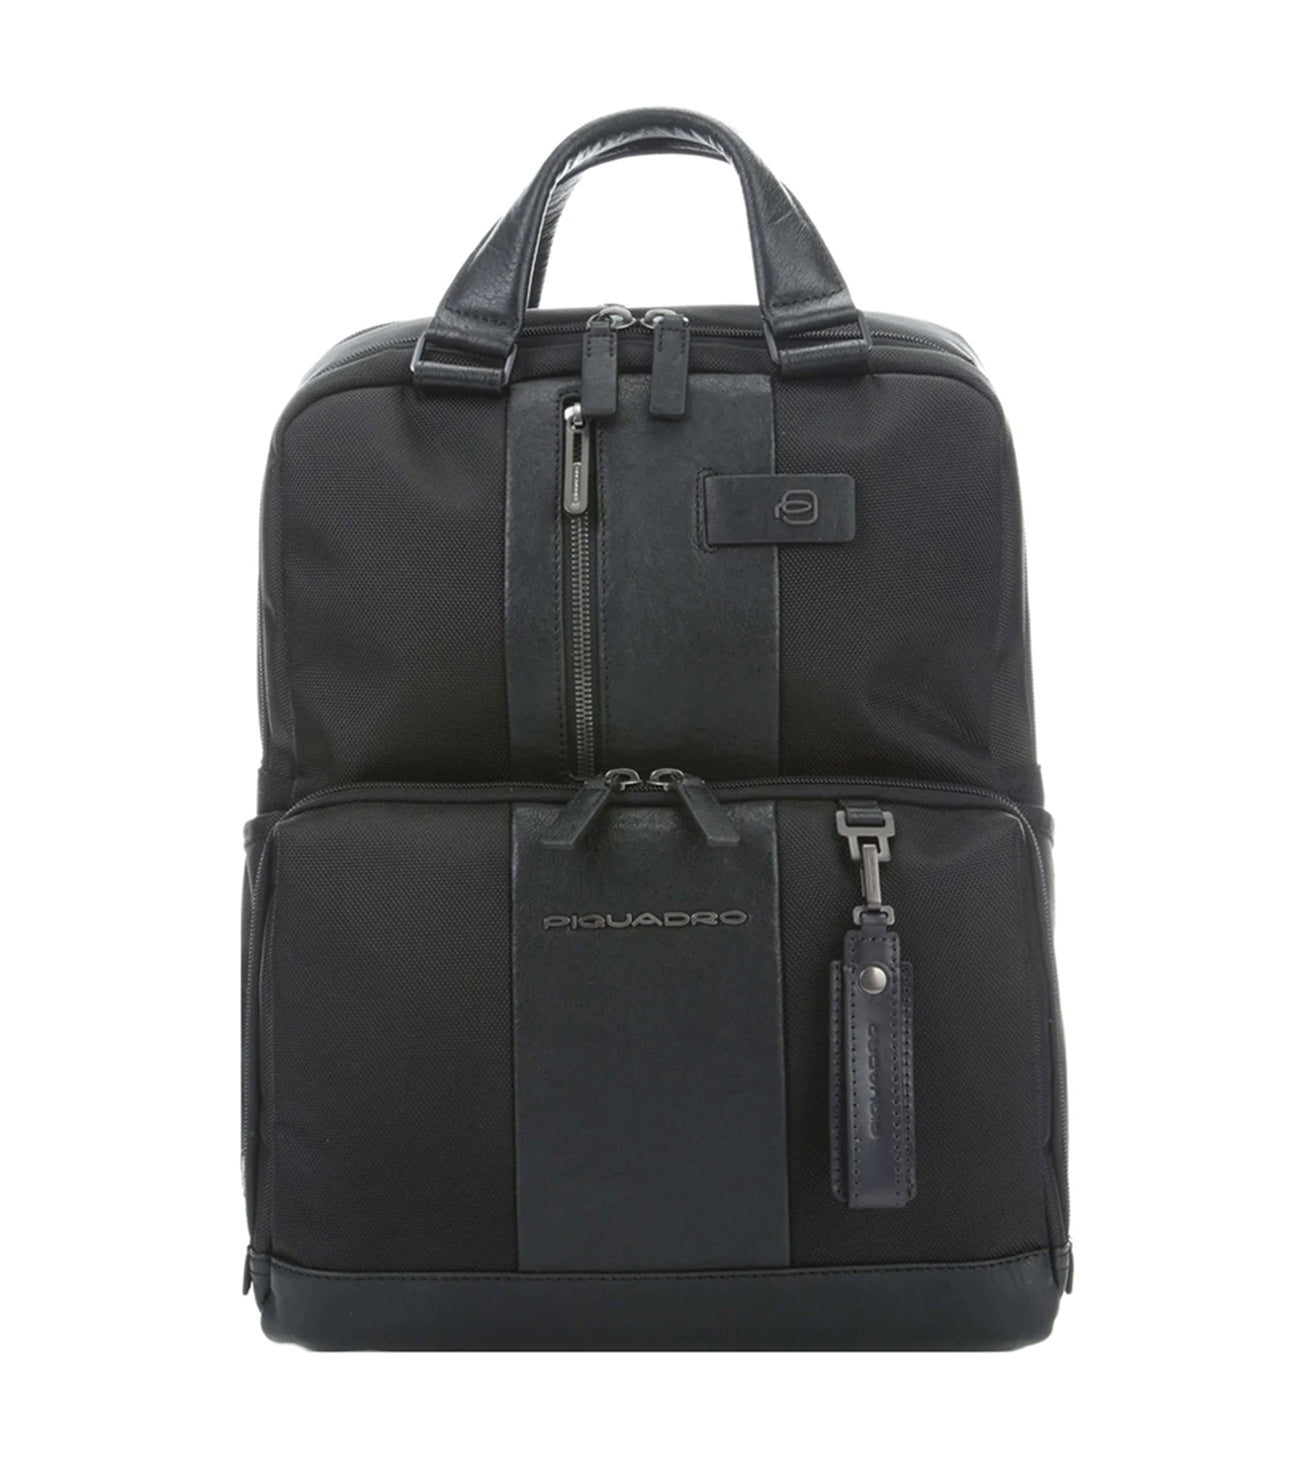 Piquadro Brief Men's Laptop Backpack